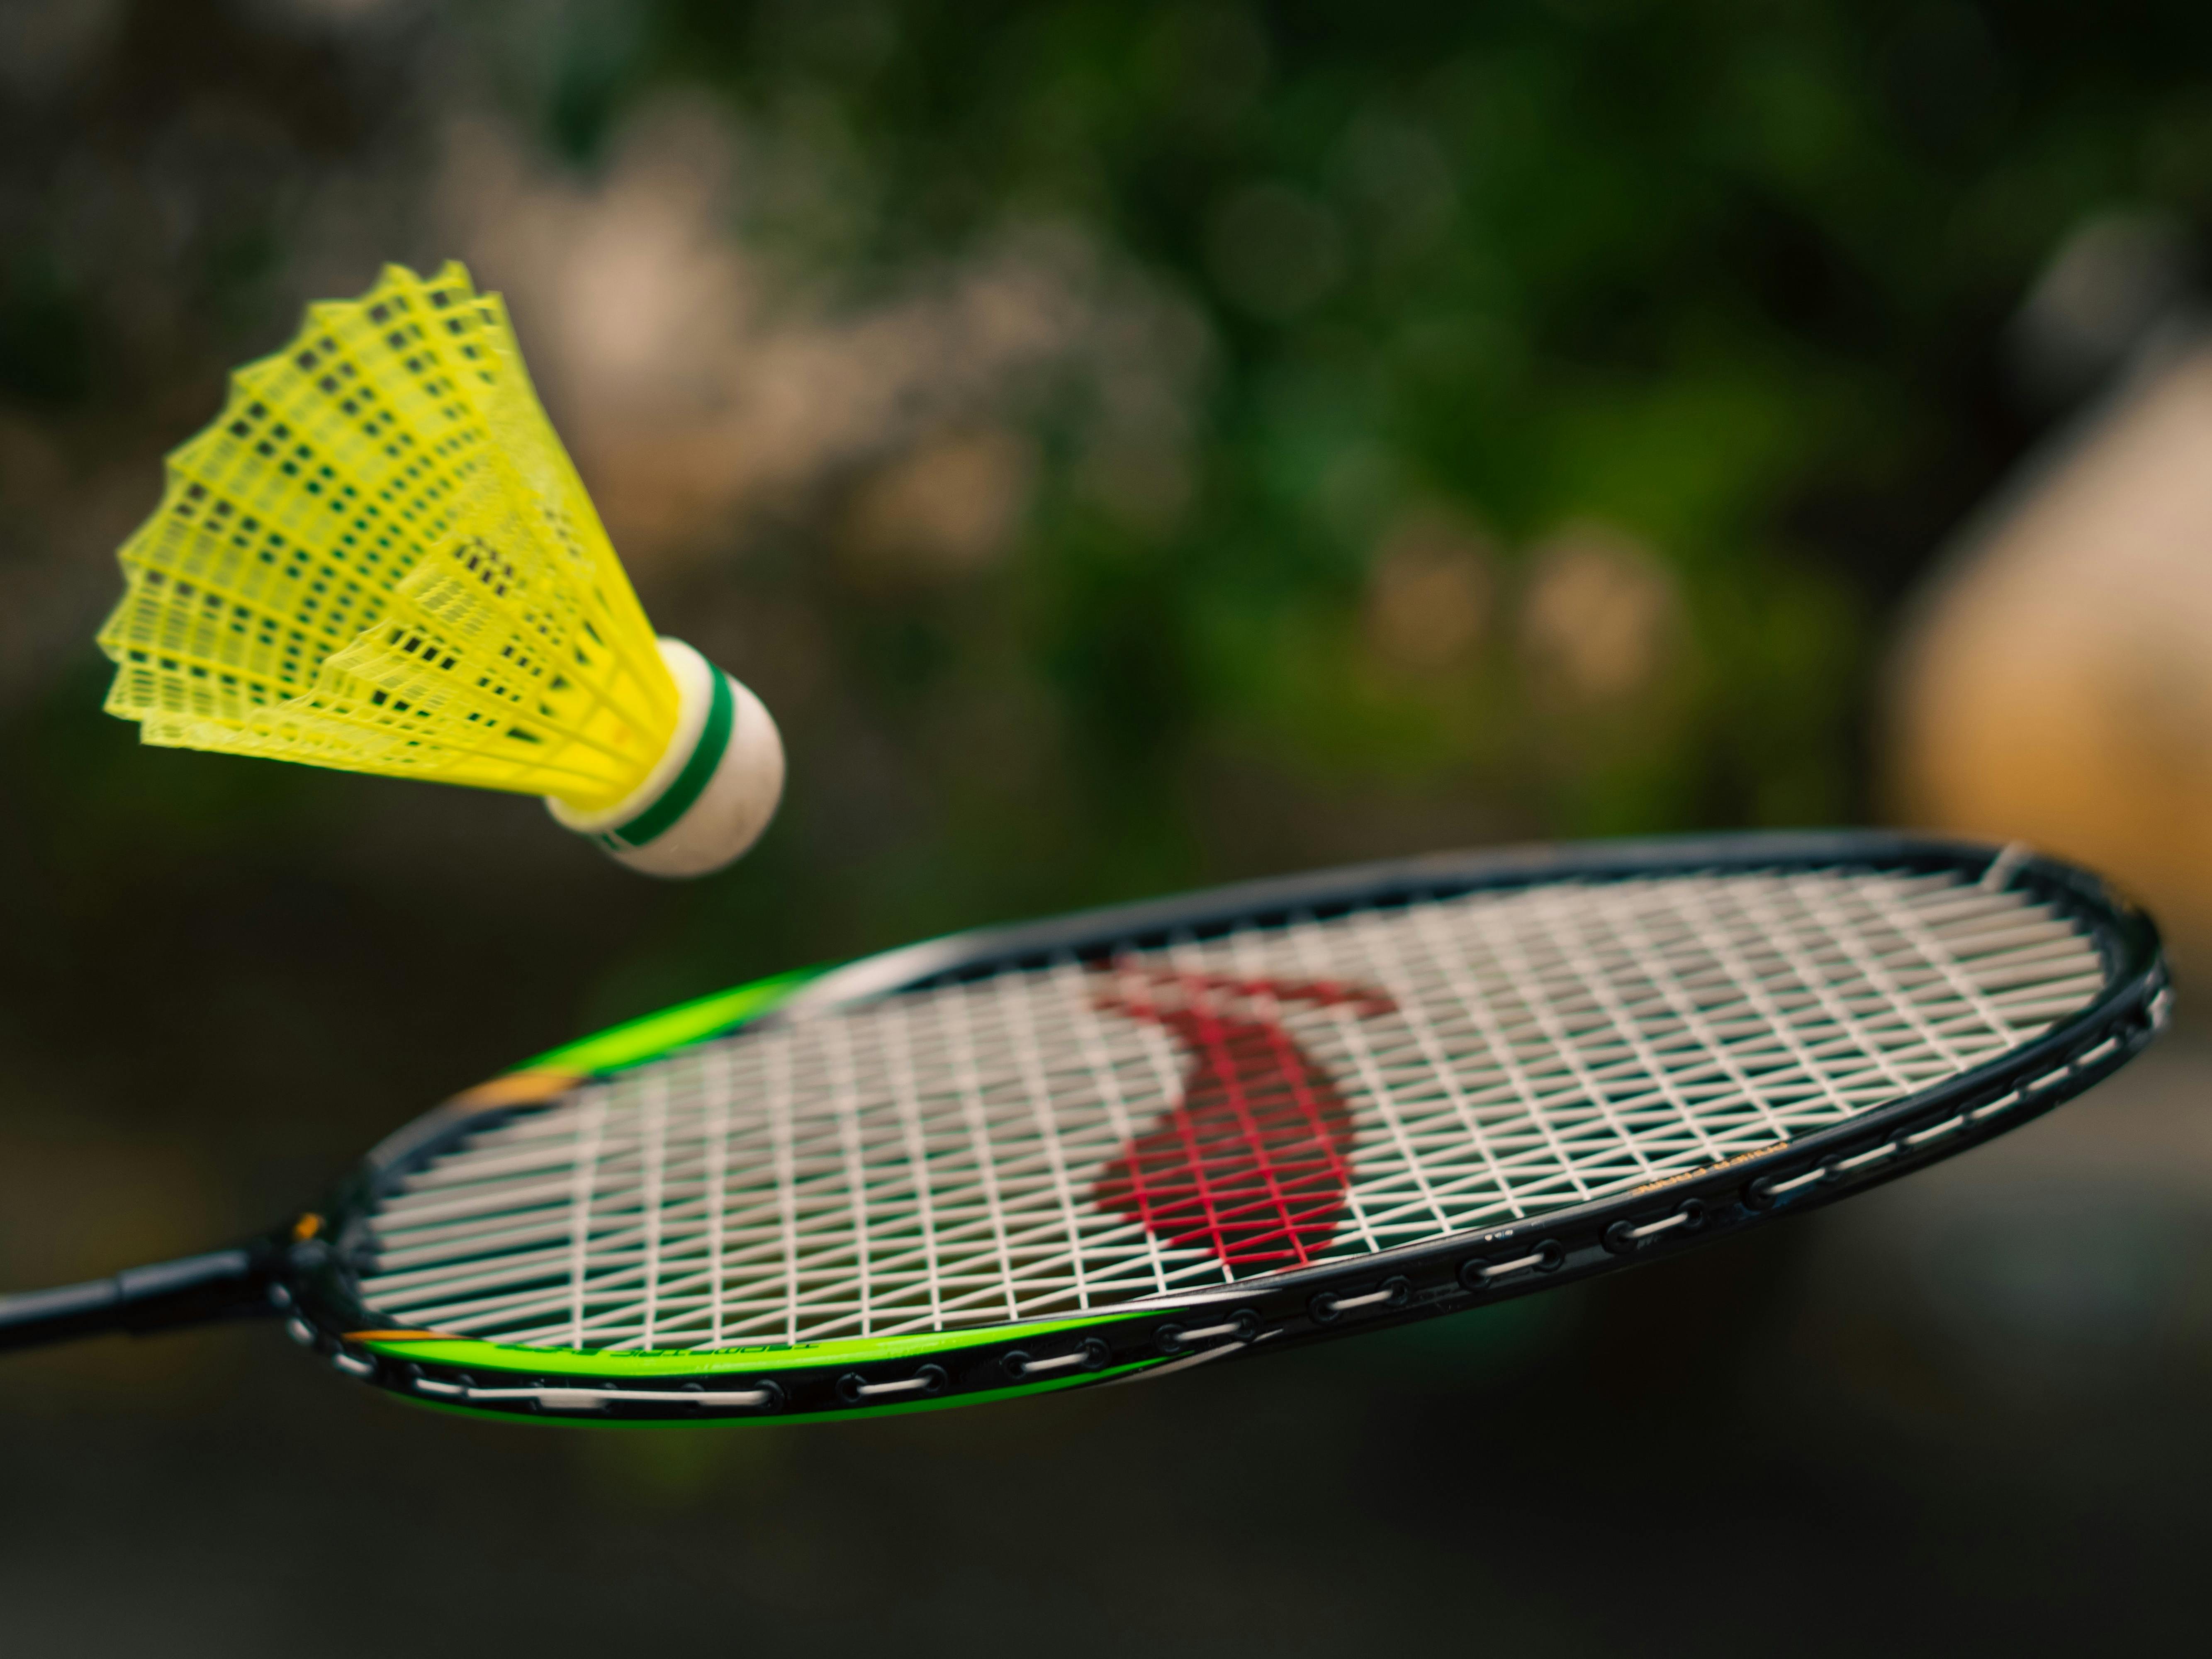 Badminton racket and shuttlecock  at close range